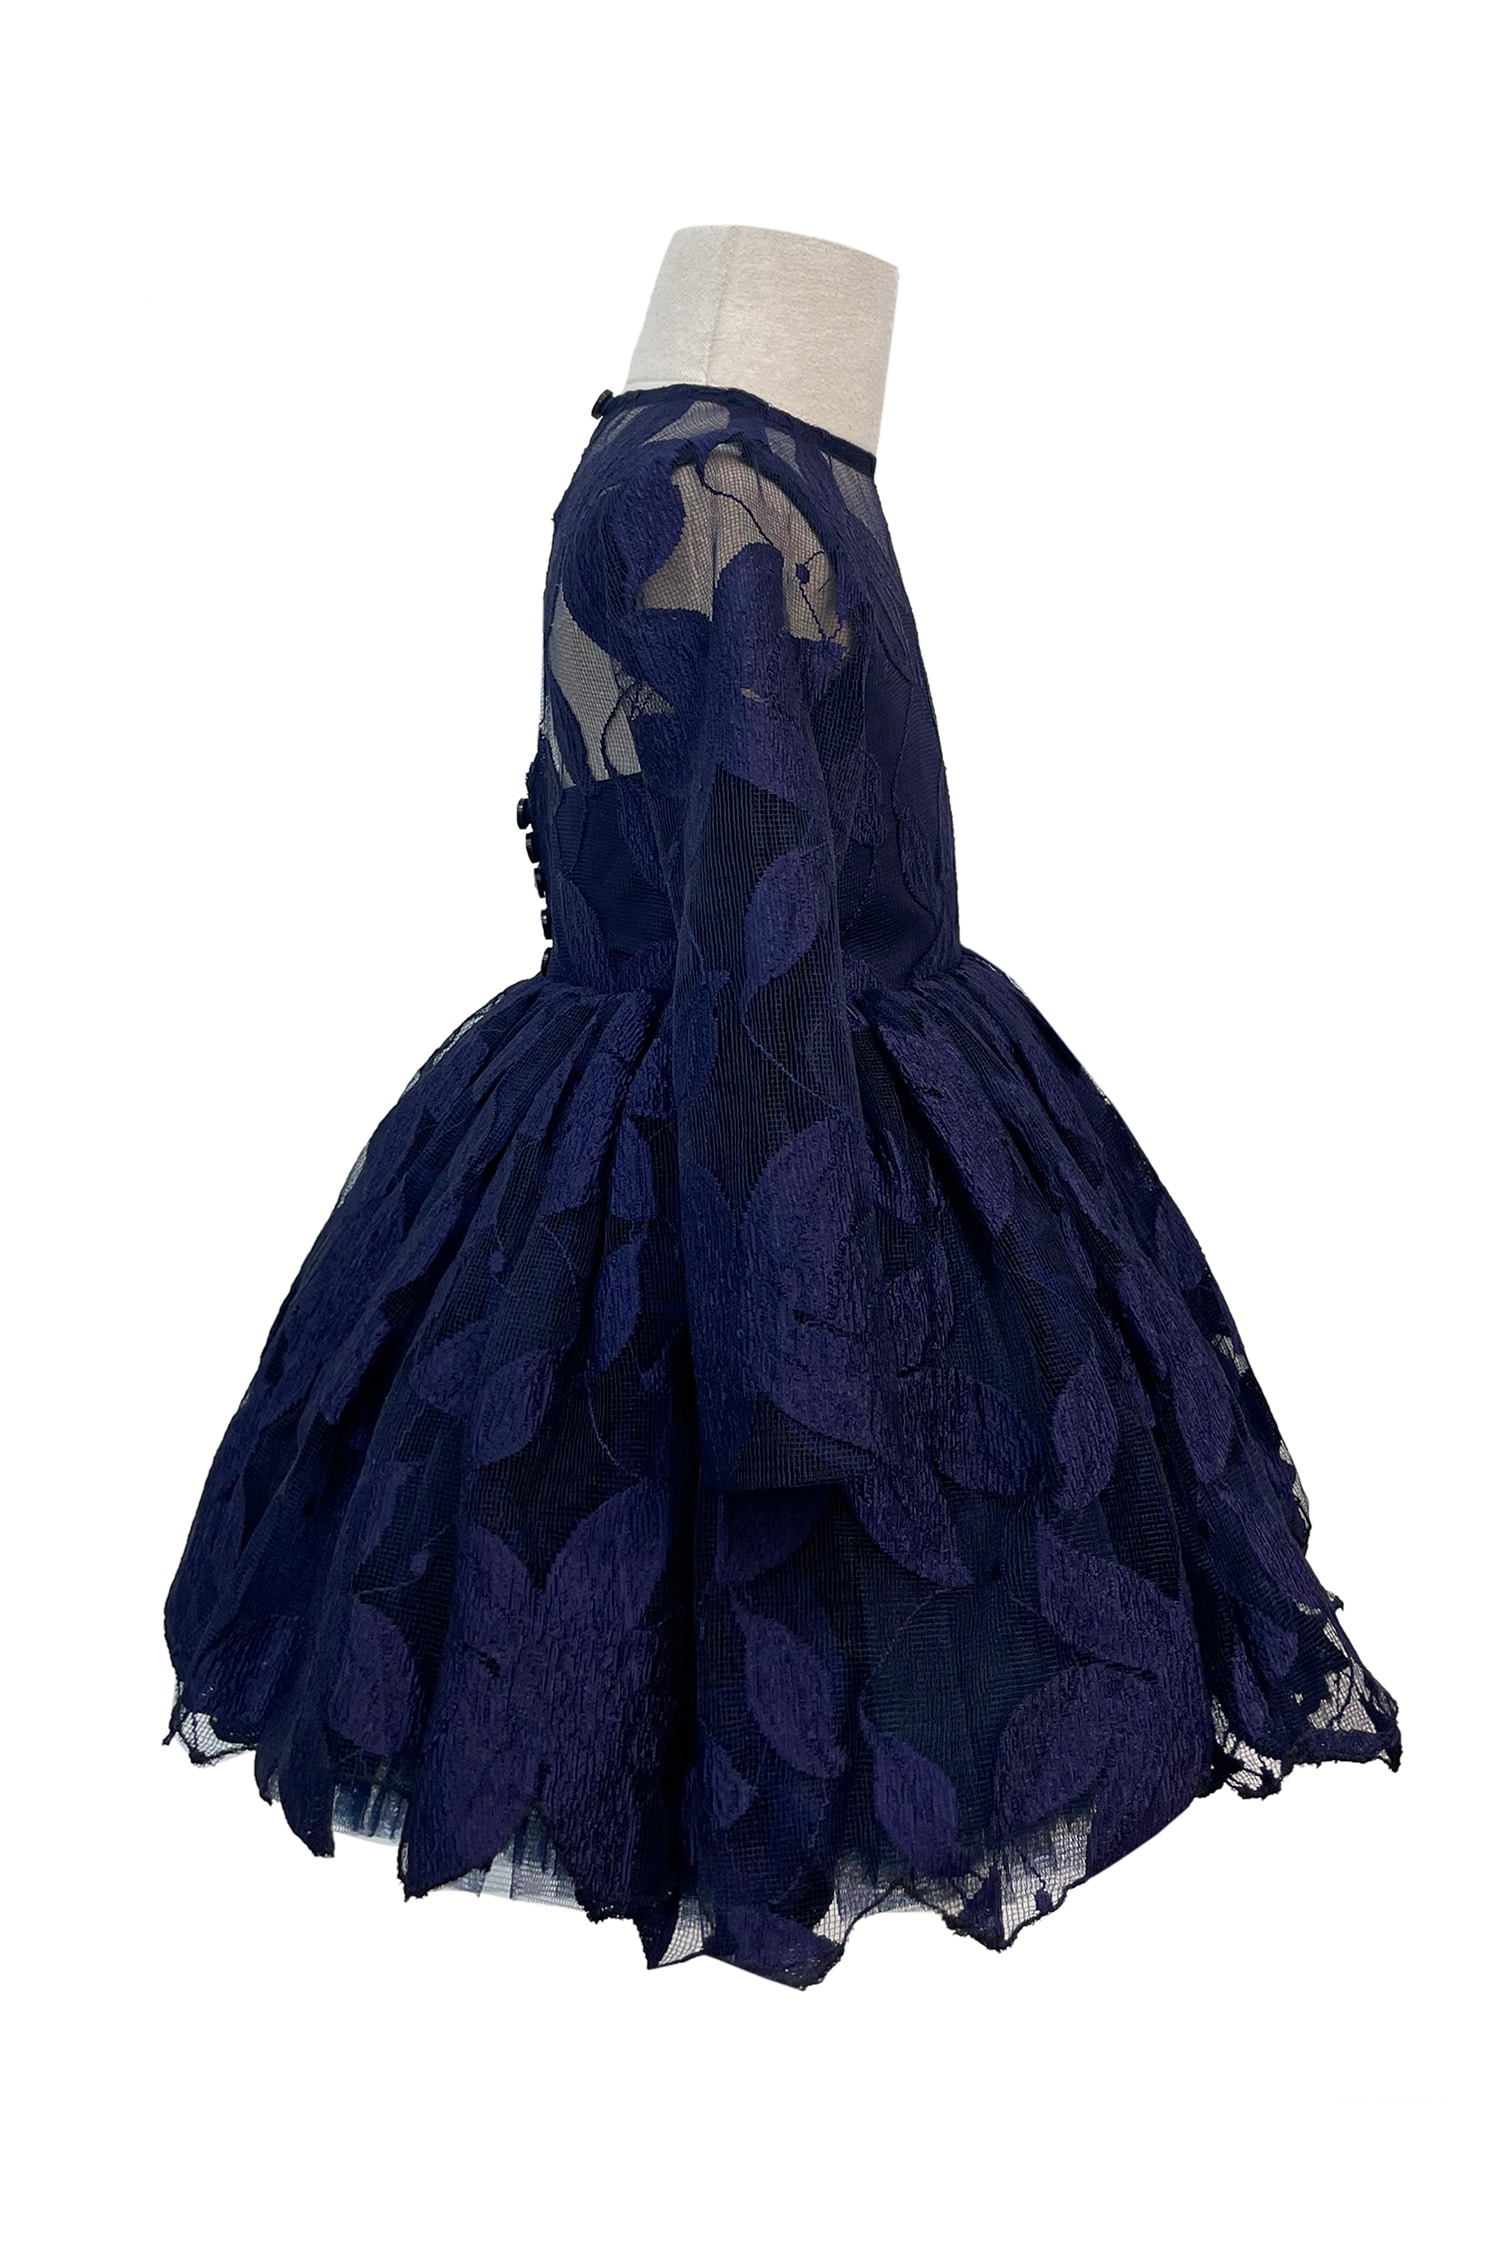 ✨HOST PICK✨ Blue Lace Dress | Модные стили, Одежда, Стиль